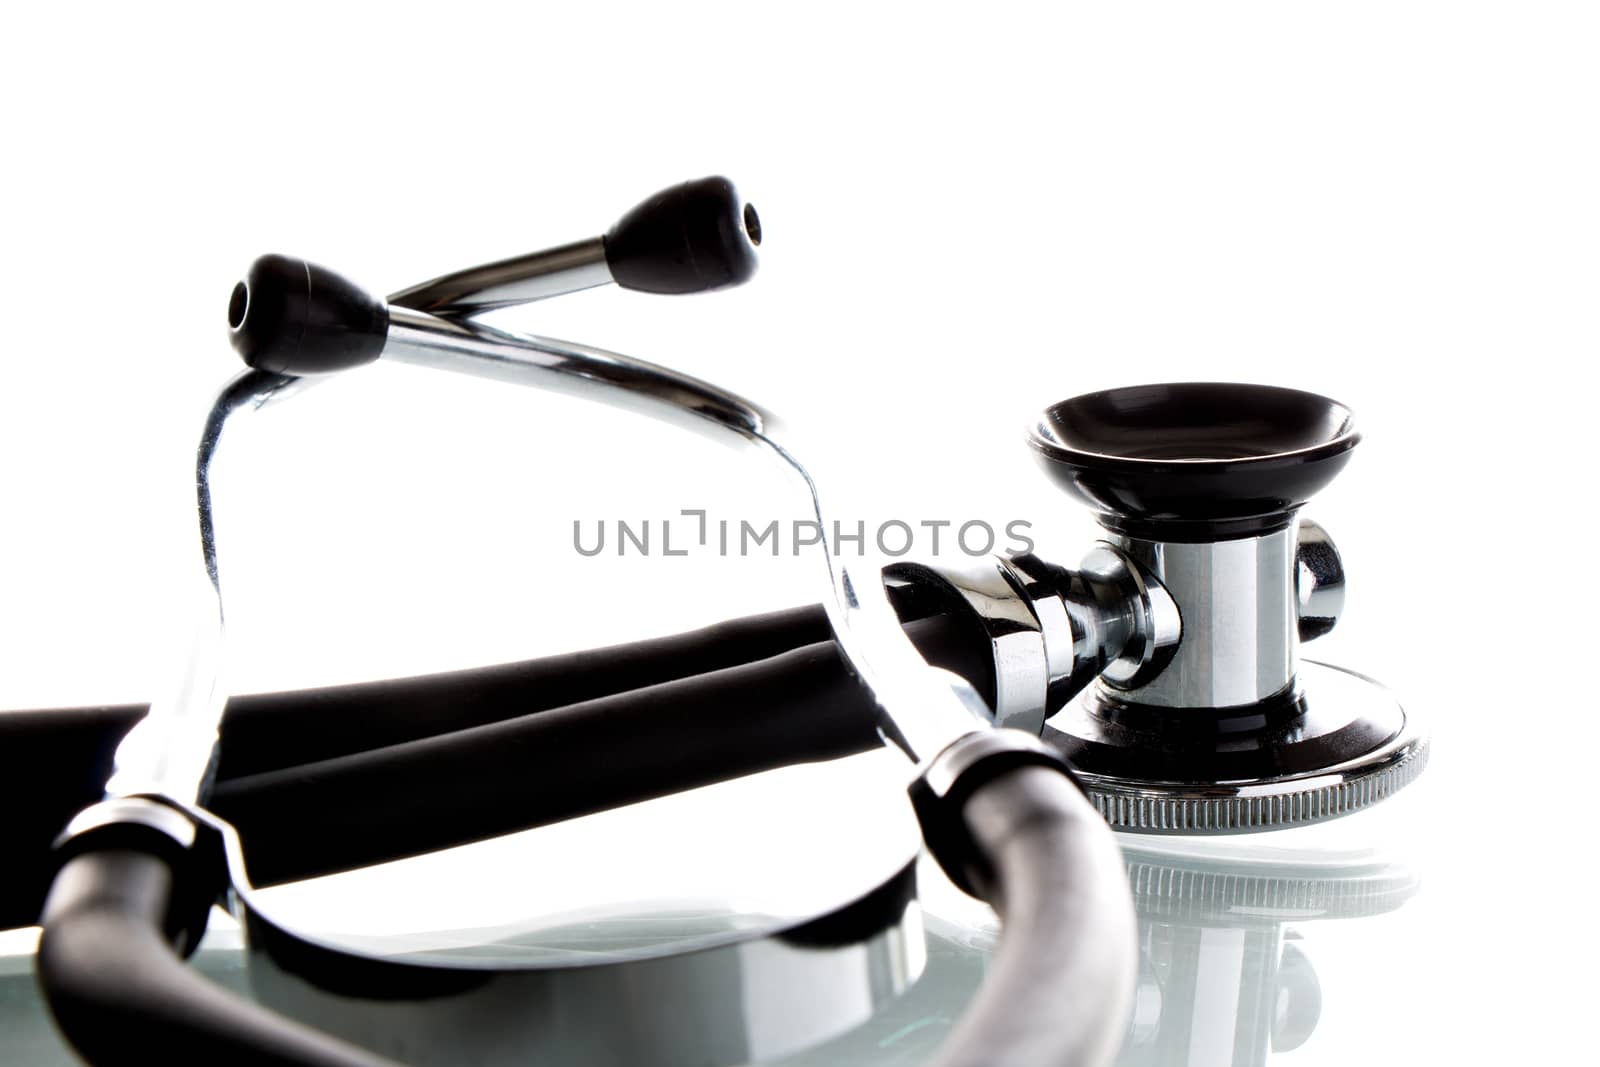 Stethoscope, close-up isolated with white background